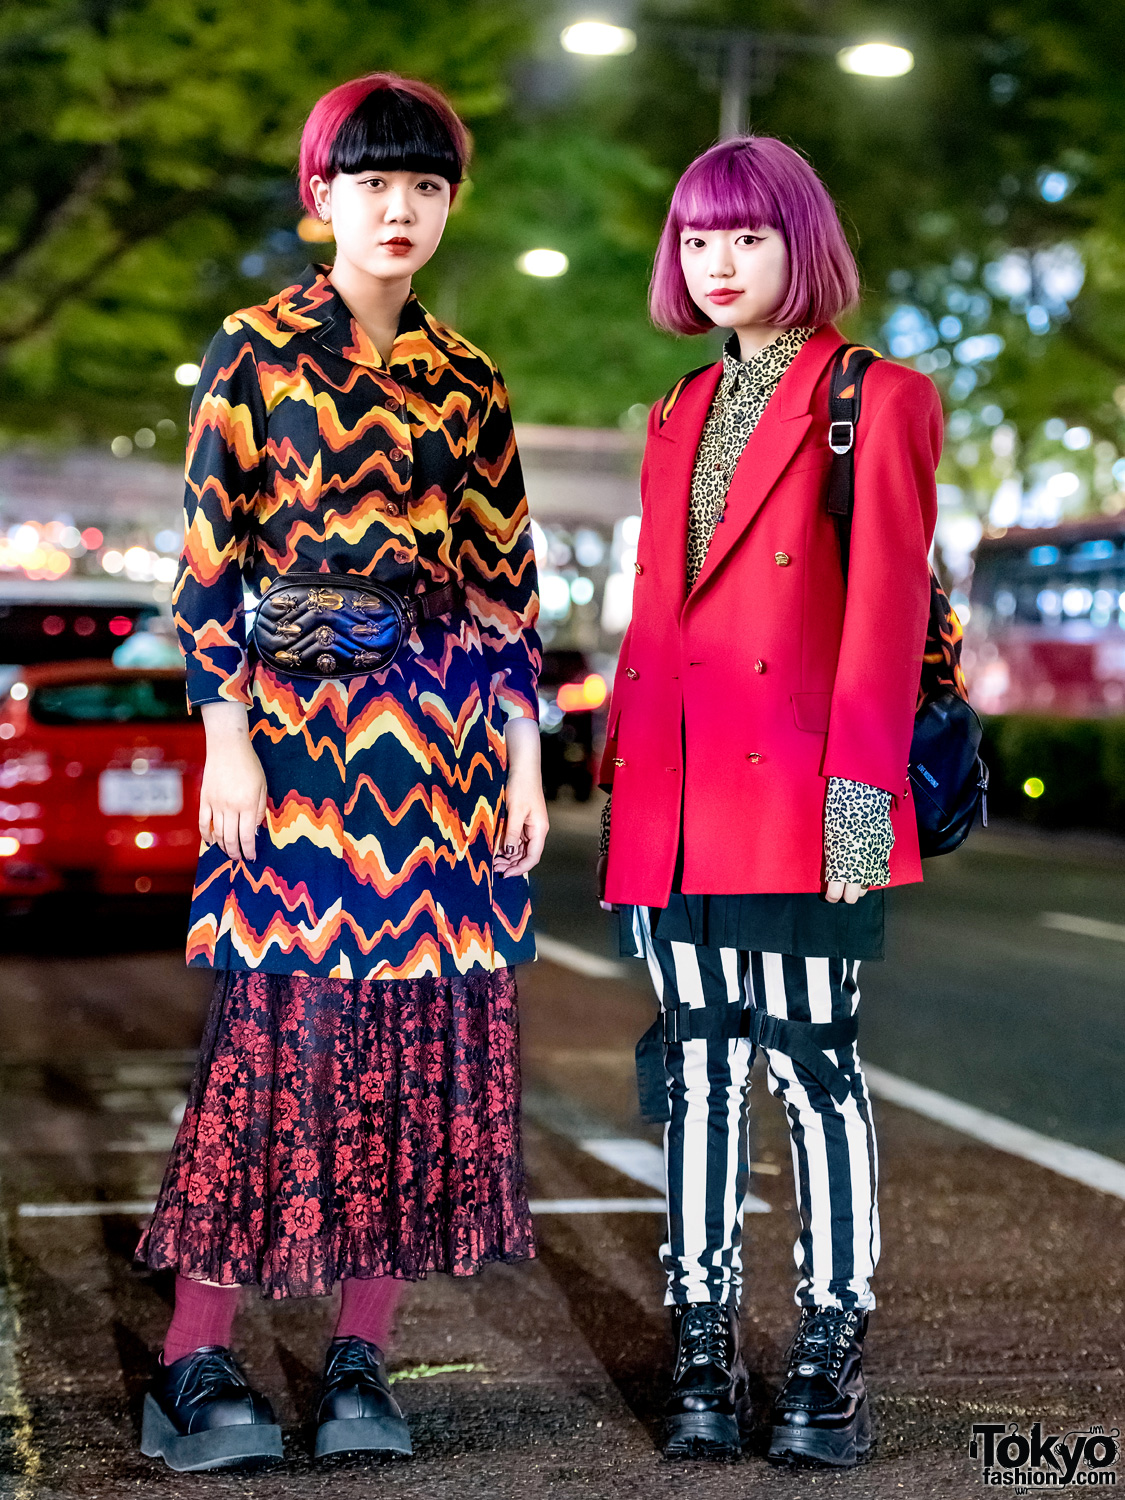 Mixed-Prints Tokyo Street Fashion w/ Coat Dress, Bondage Pants, Flame Backpack & Platform Shoes